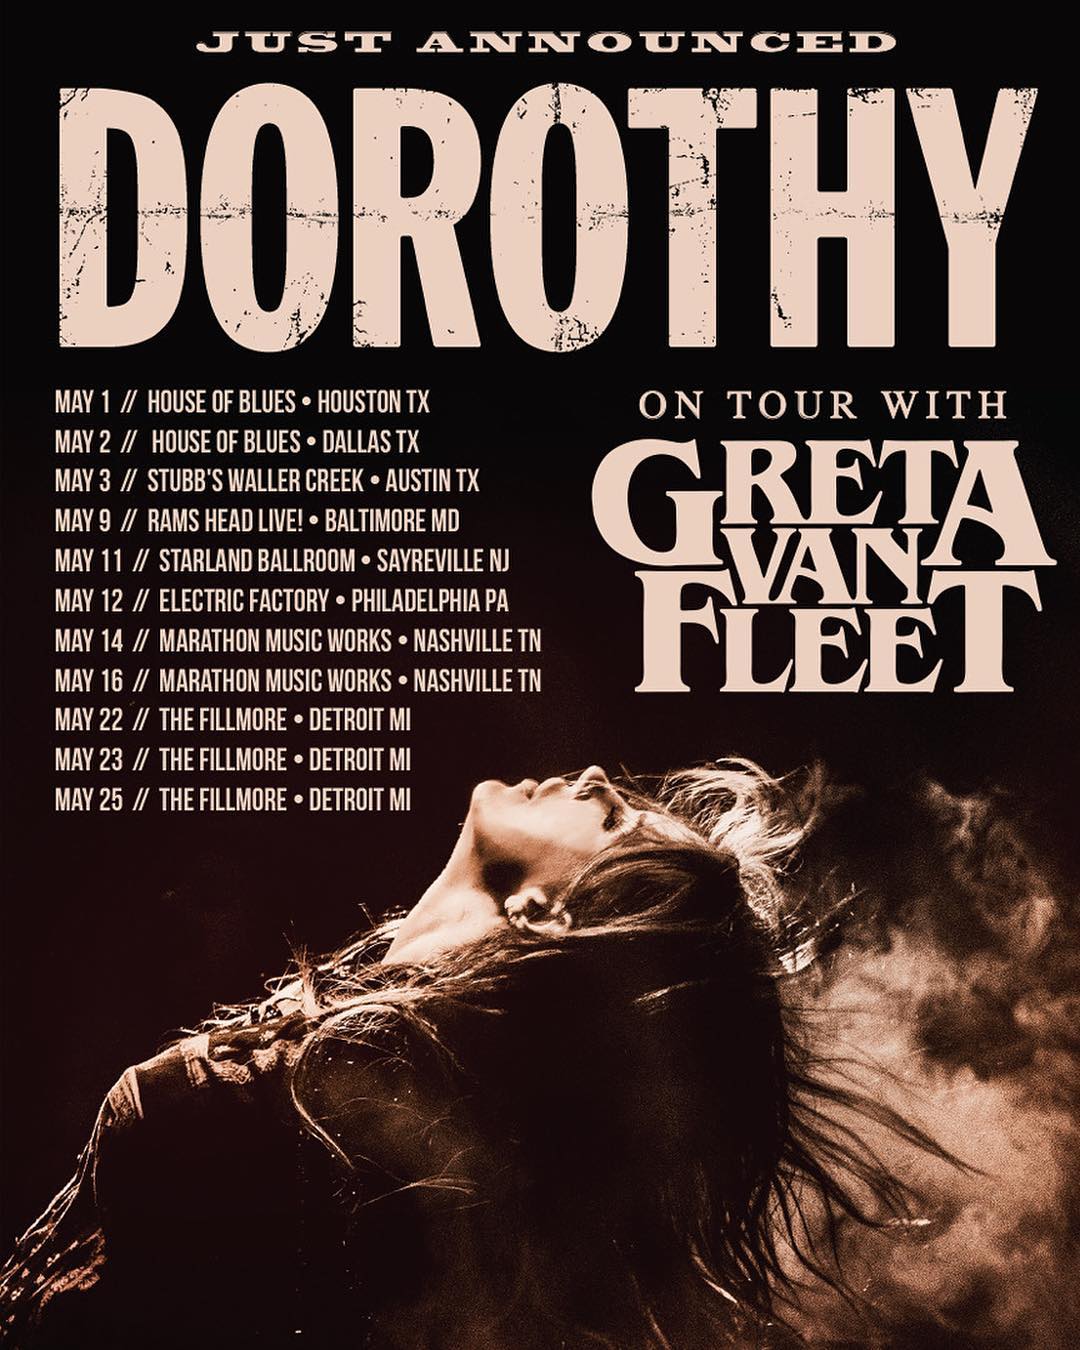 Dorothy tour with Greta Van Fleet poster